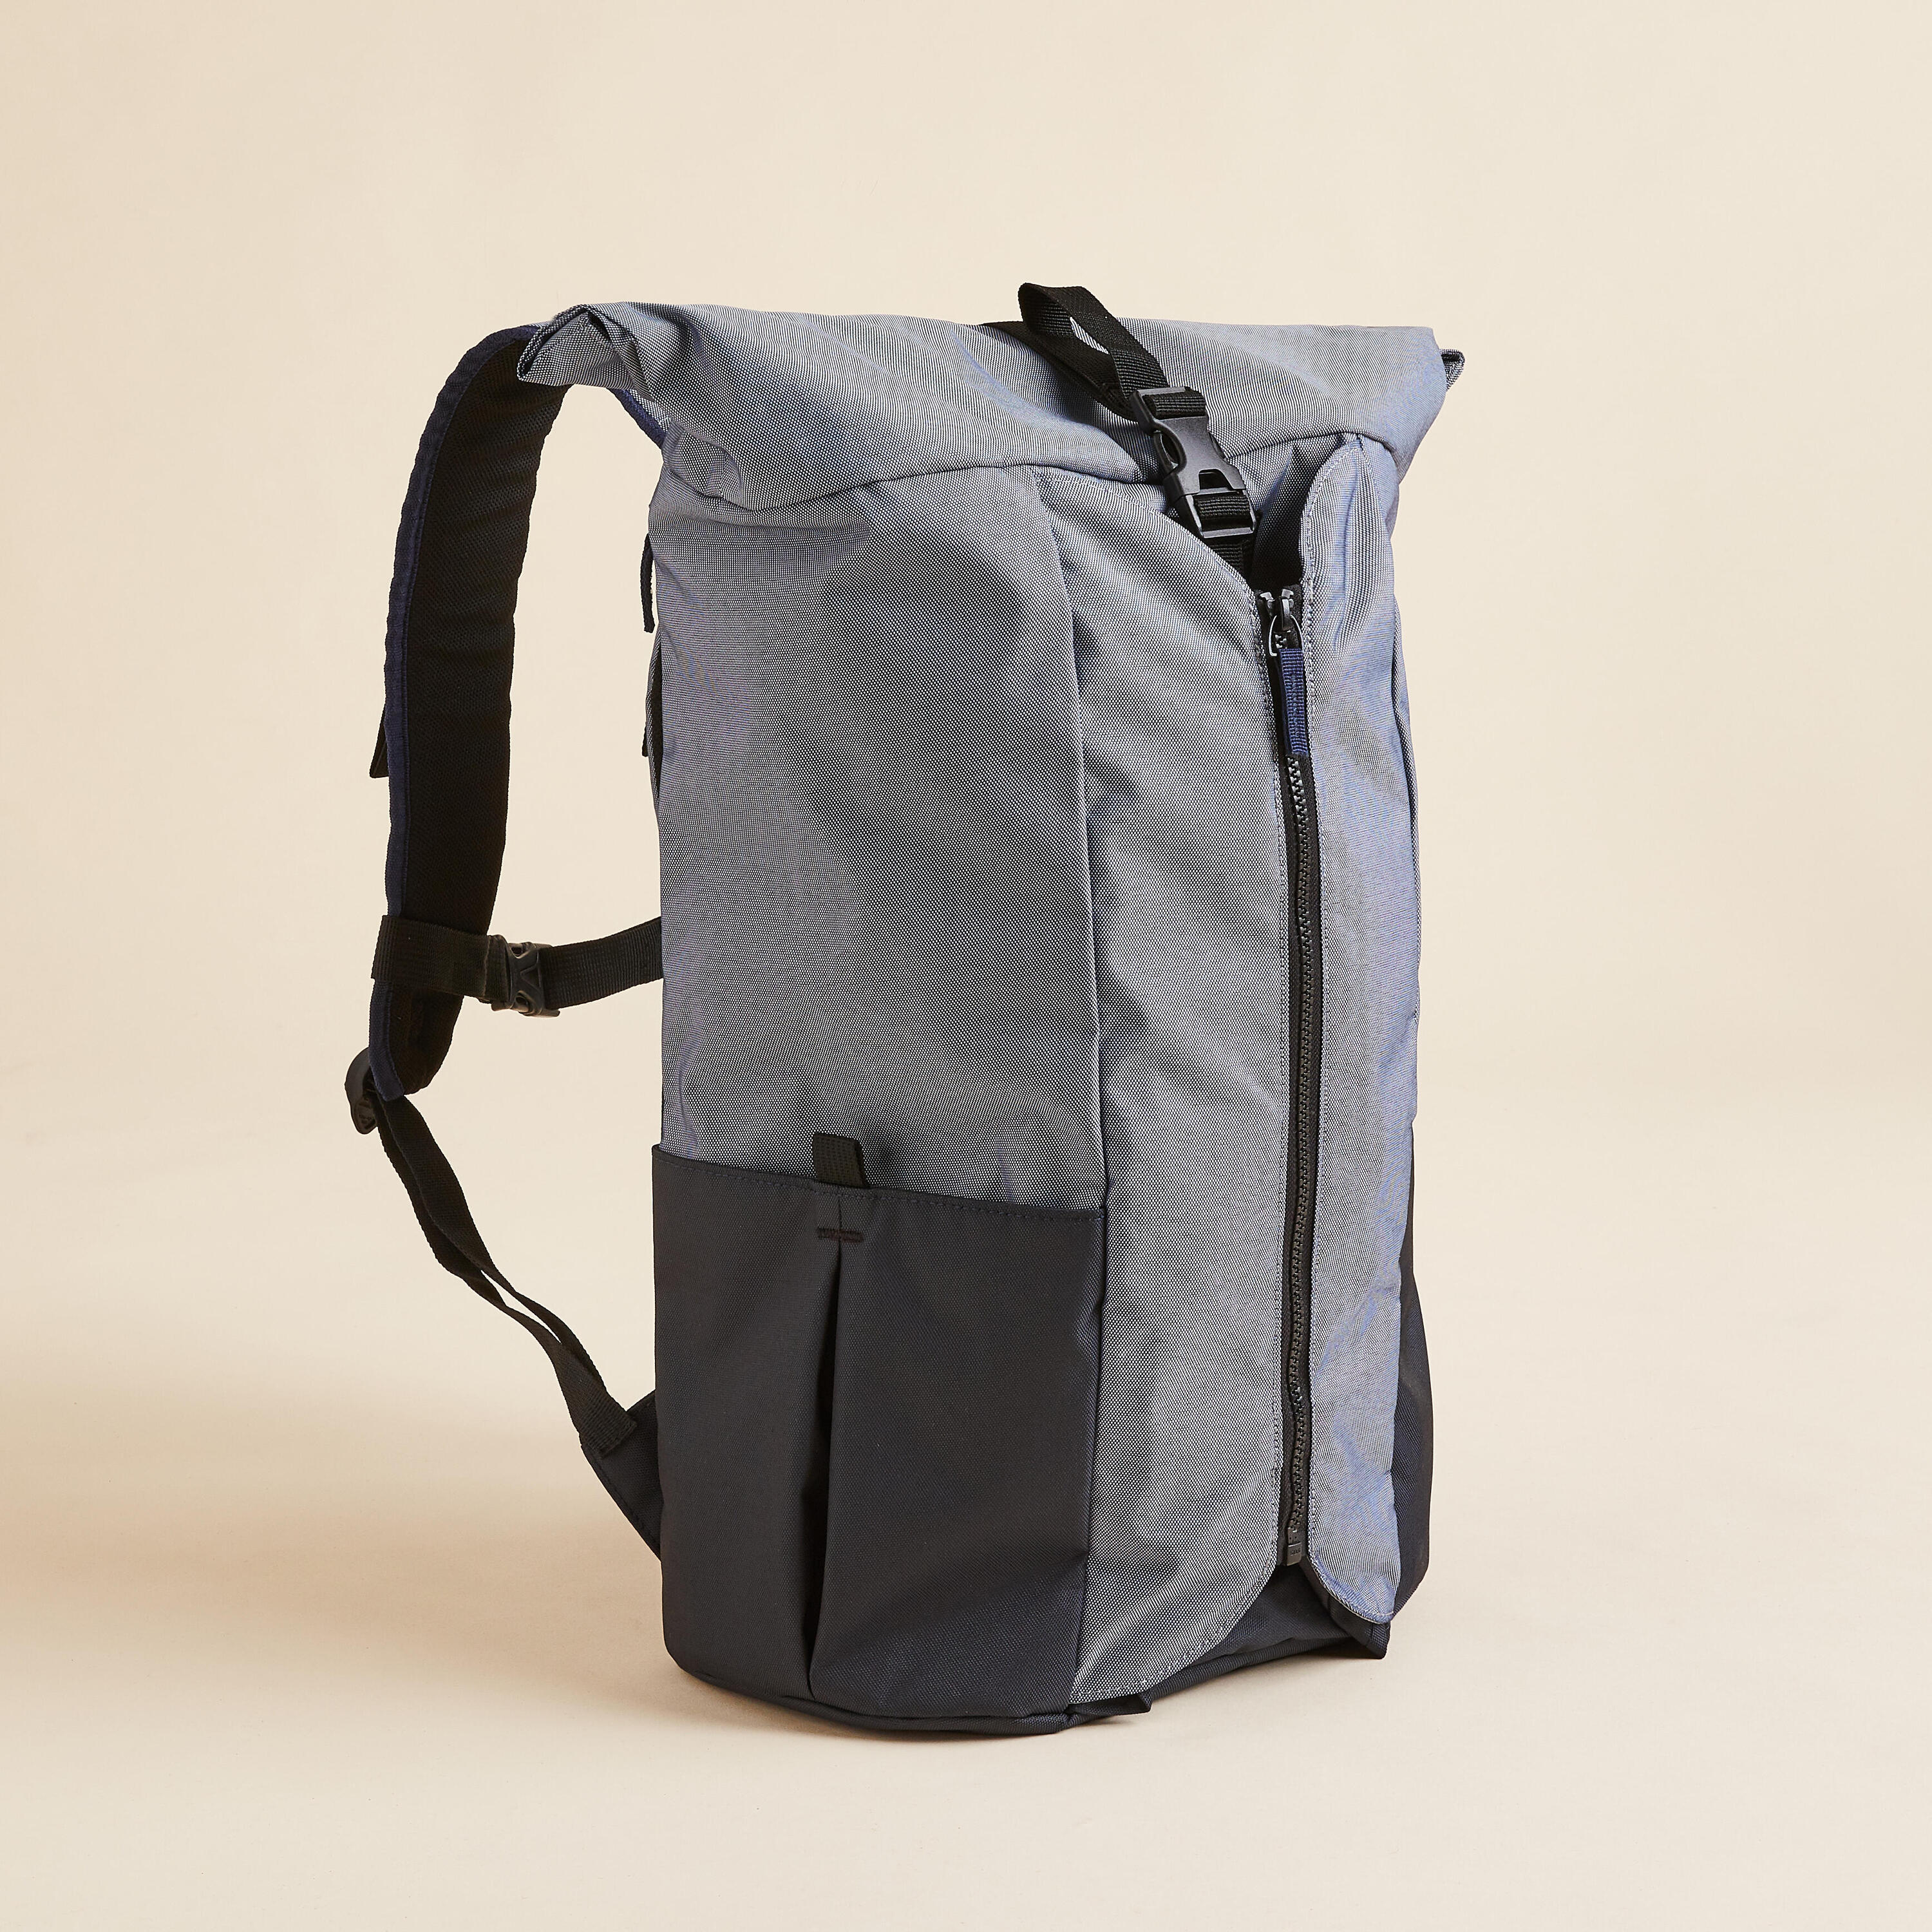 Yoga Mat Backpack - Blue/Grey 2/12